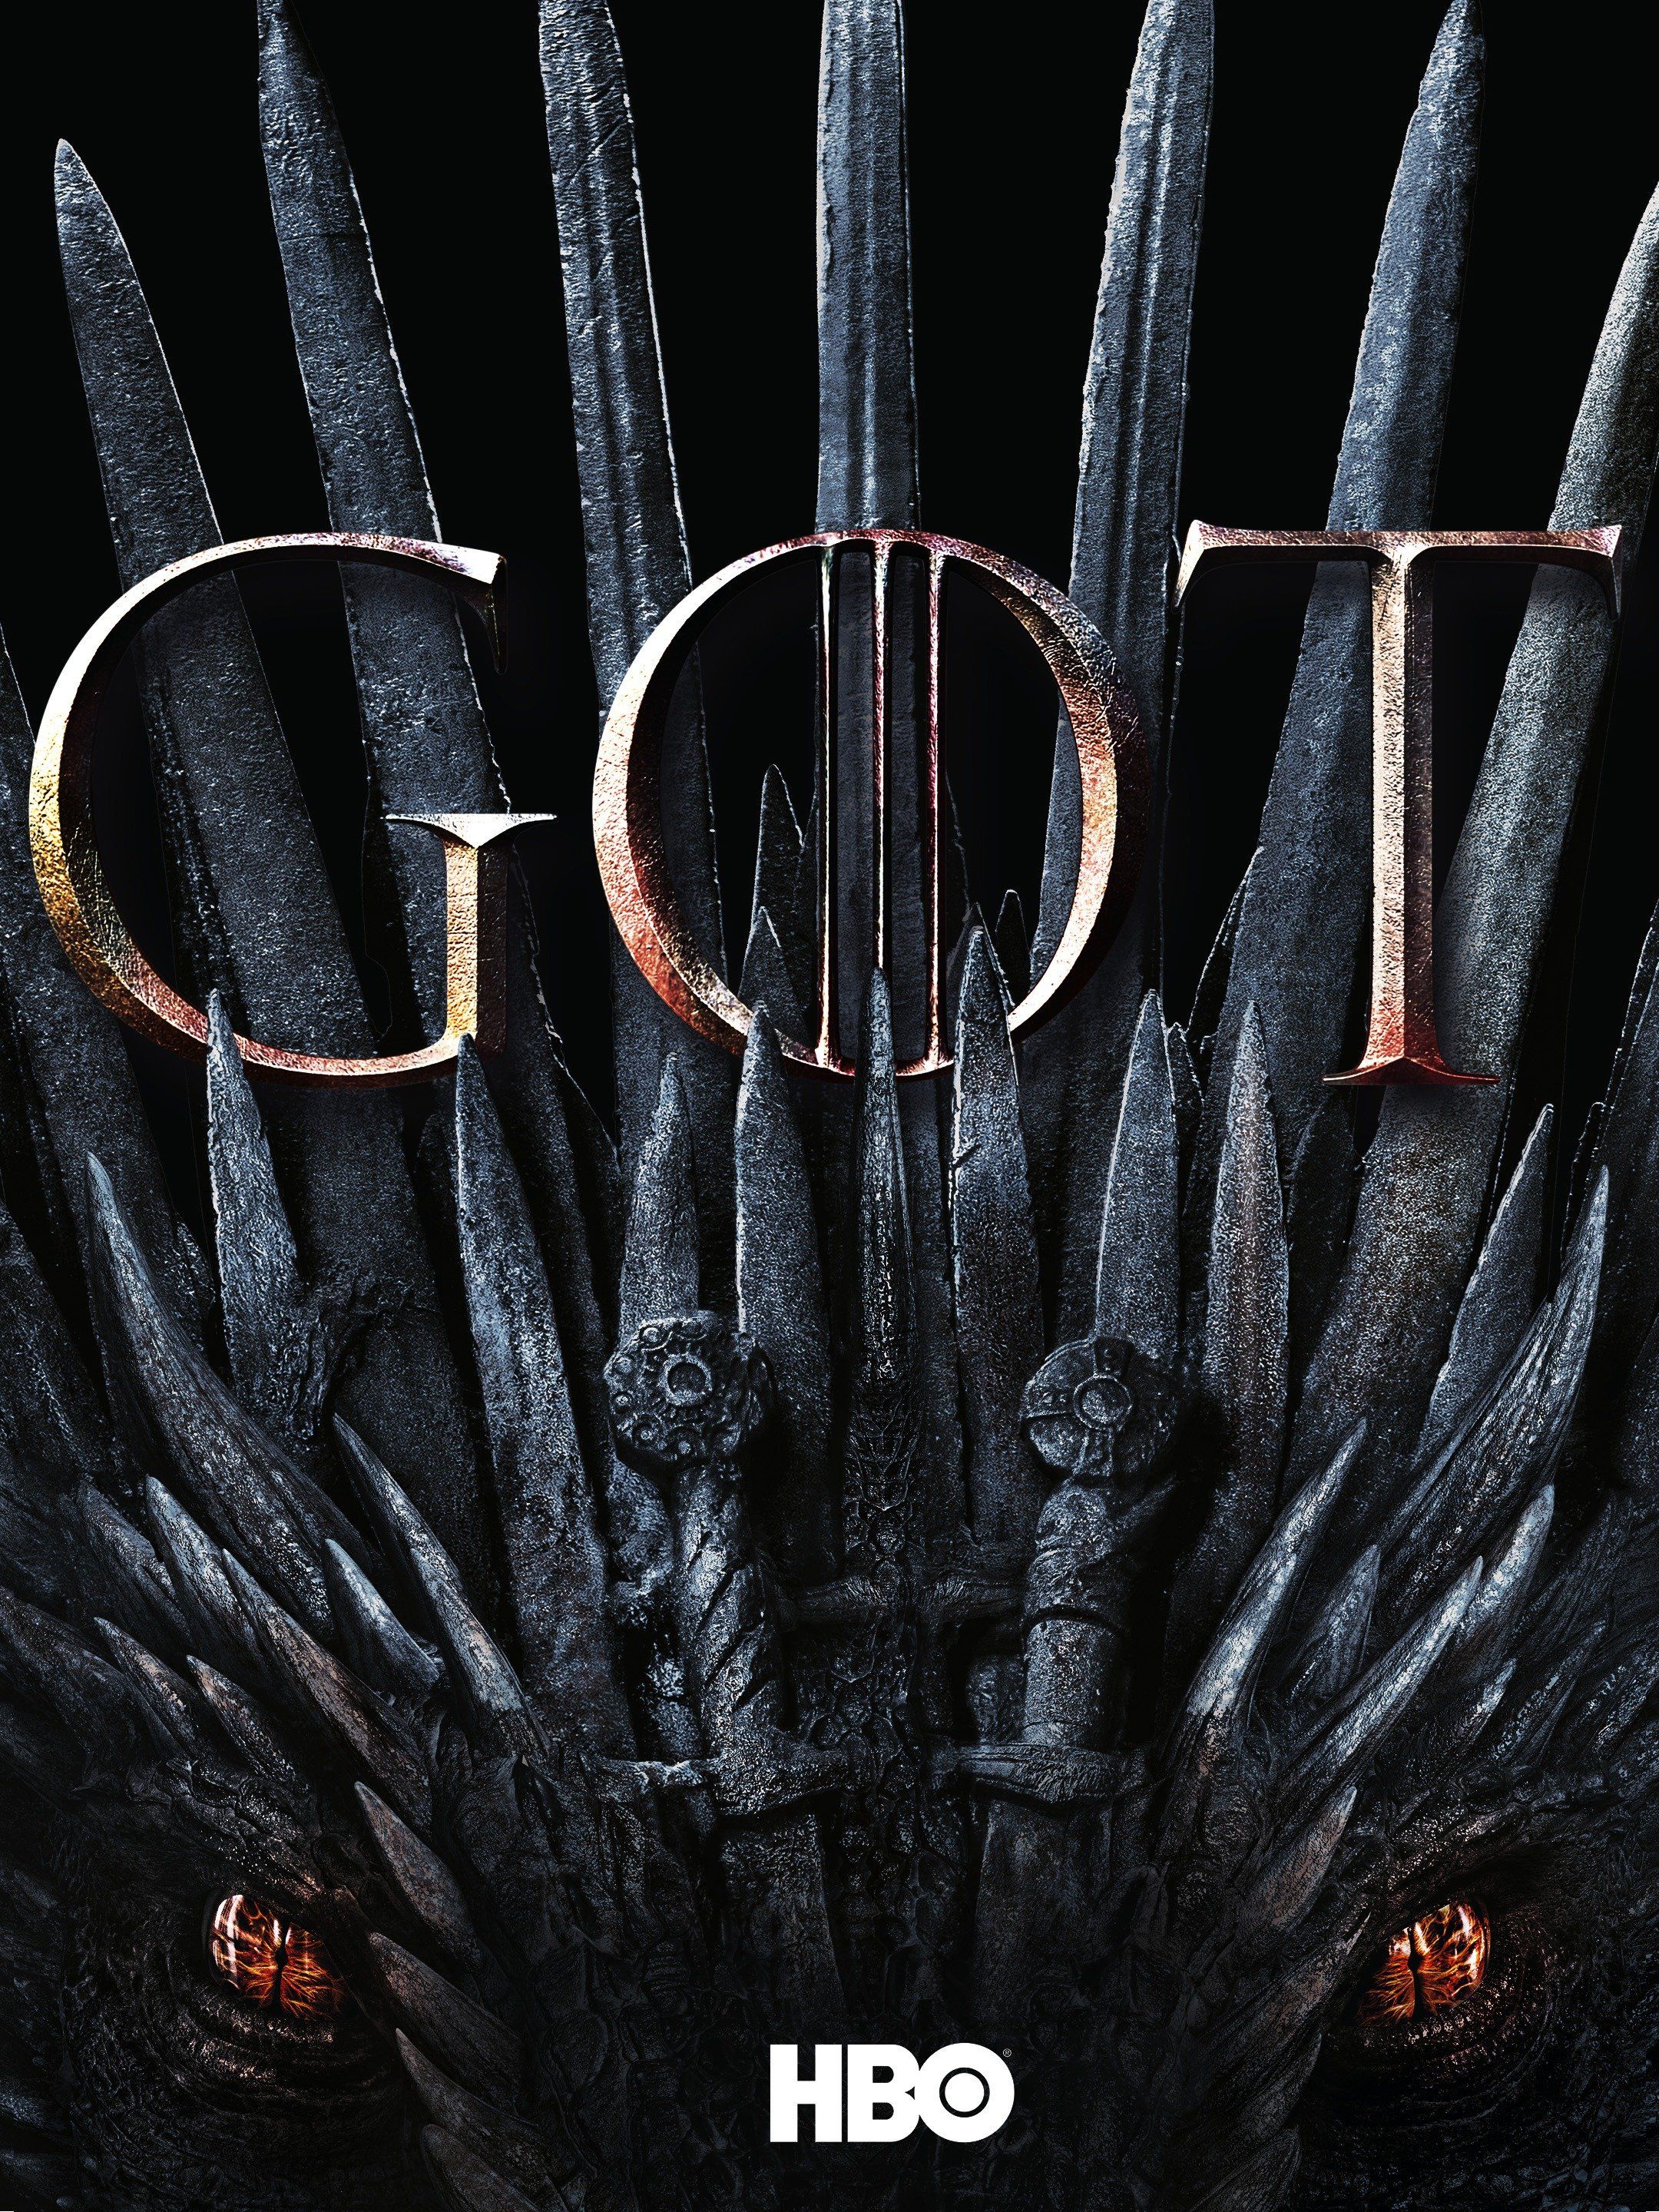 HBO canceló Gane of Thrones: fraude de productores ejecutivos